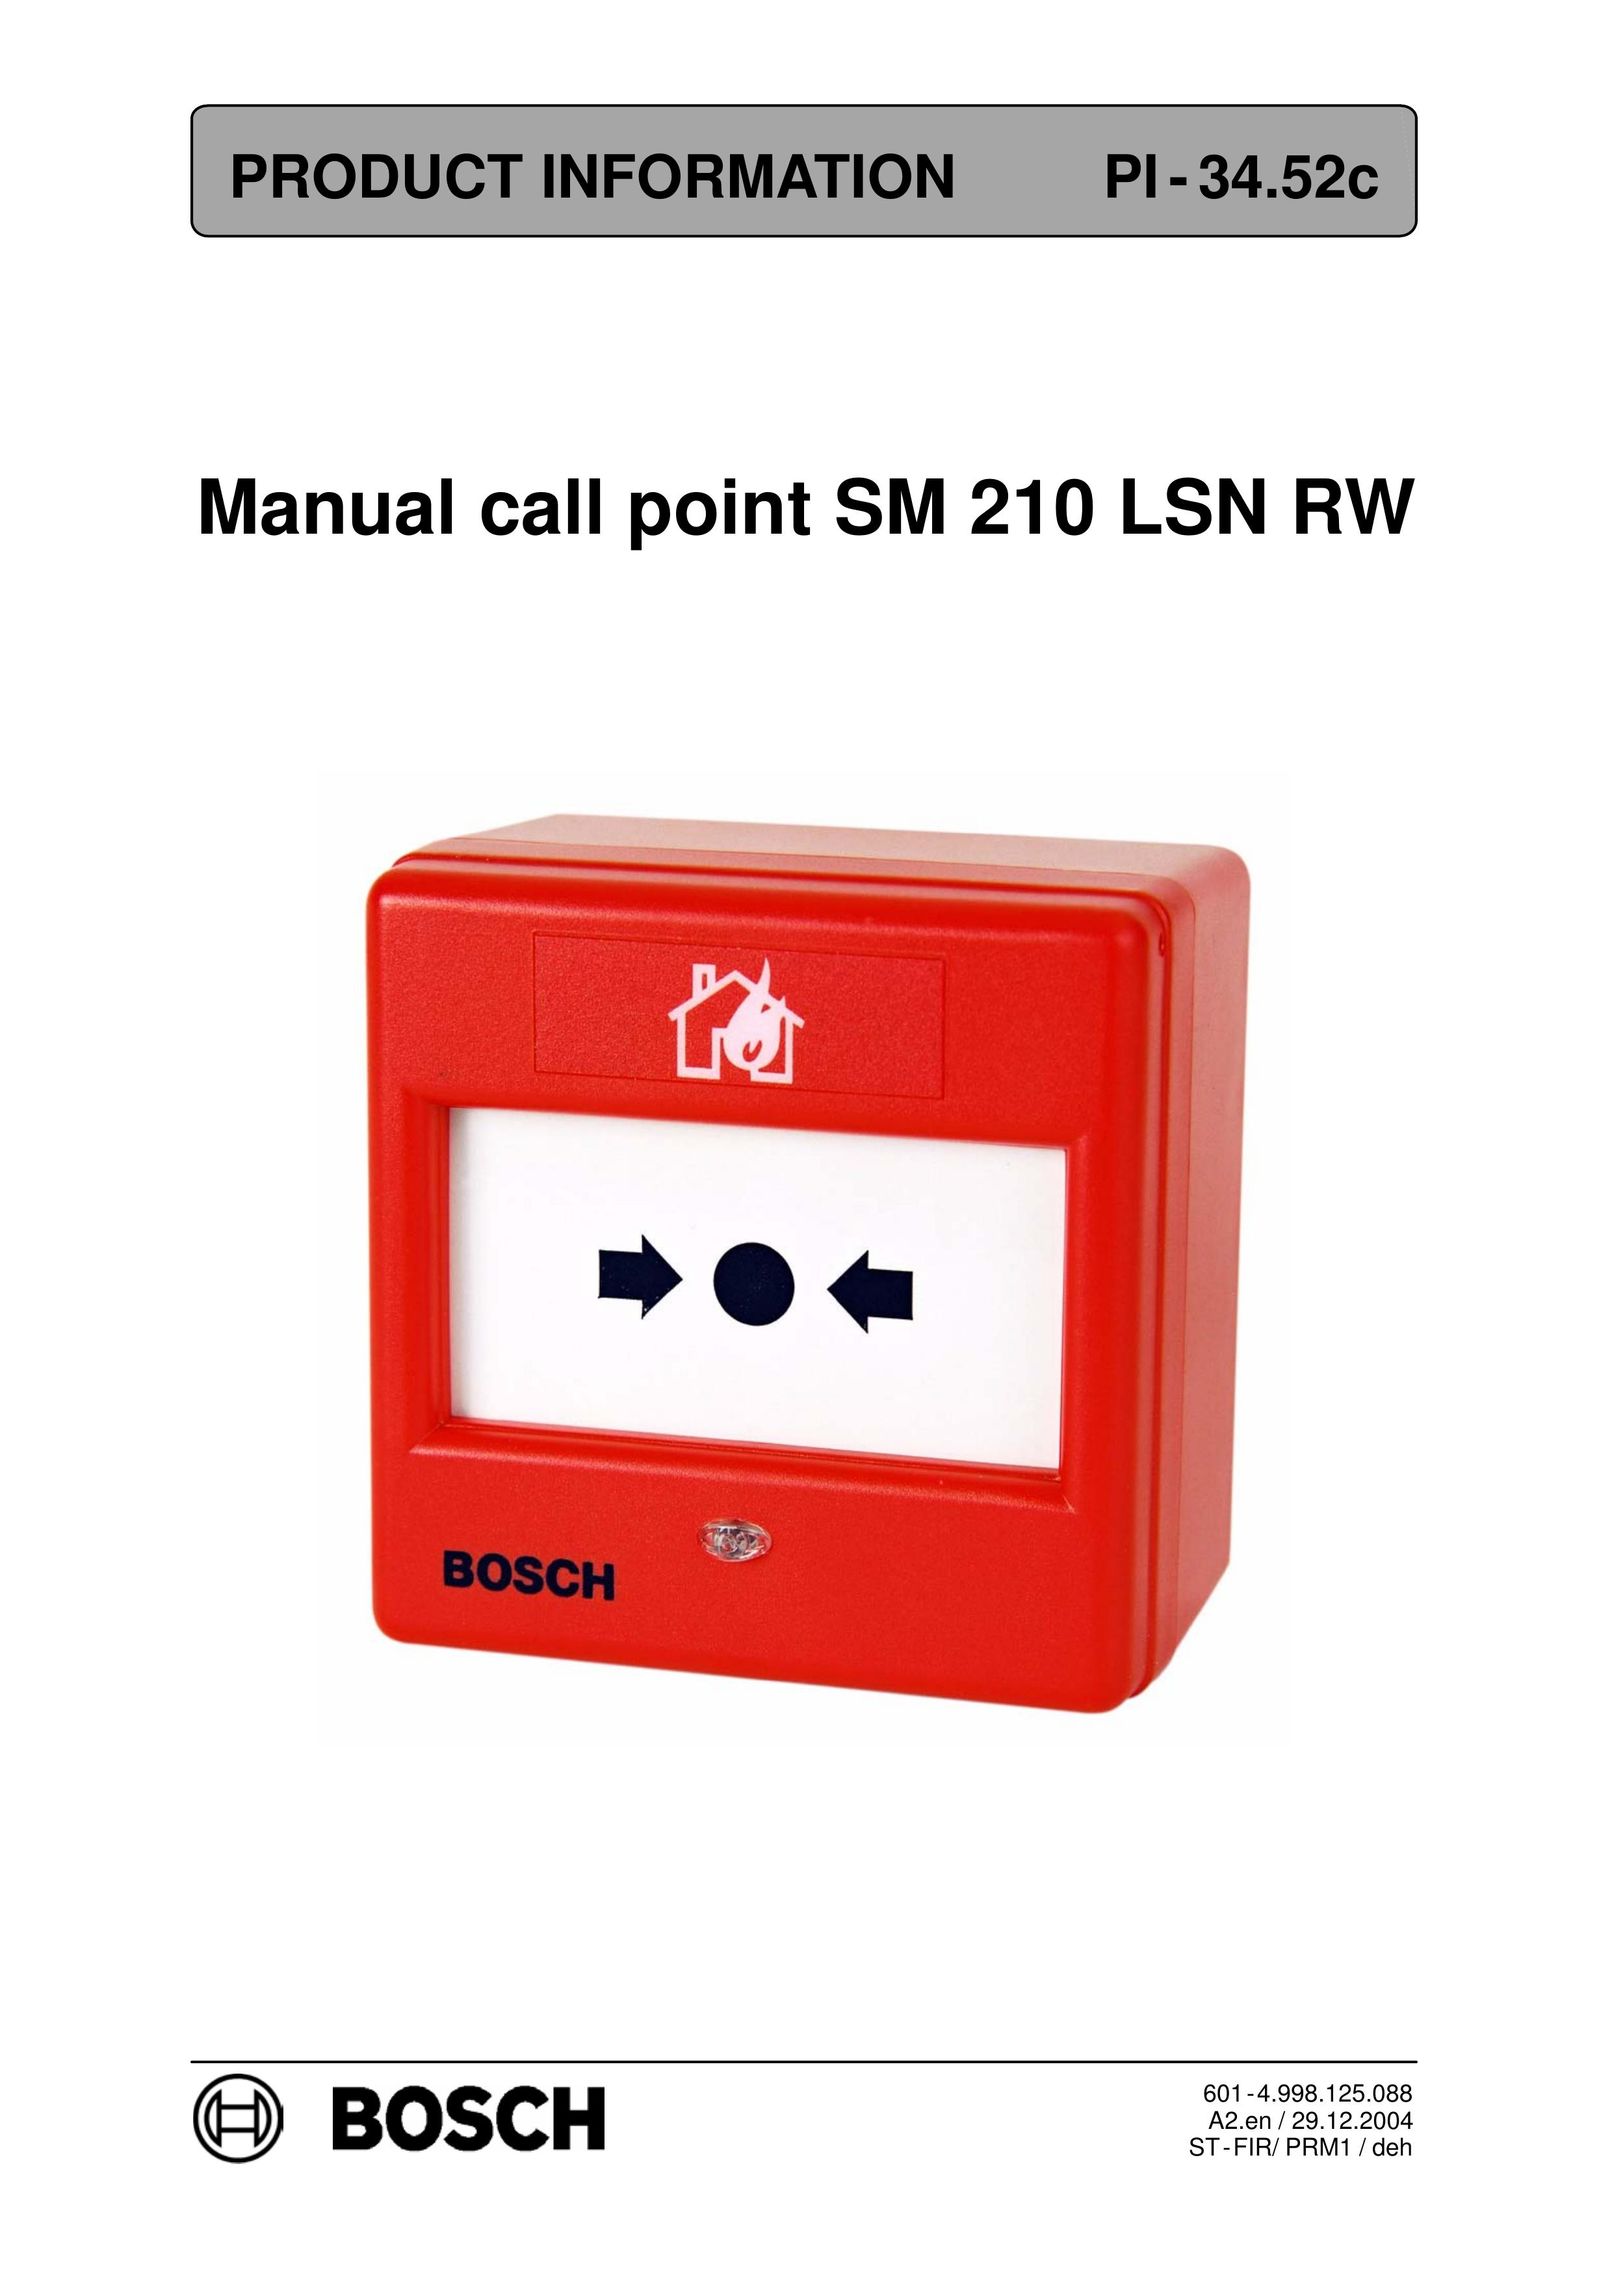 Bosch Appliances SM 210 LSN RW Smoke Alarm User Manual